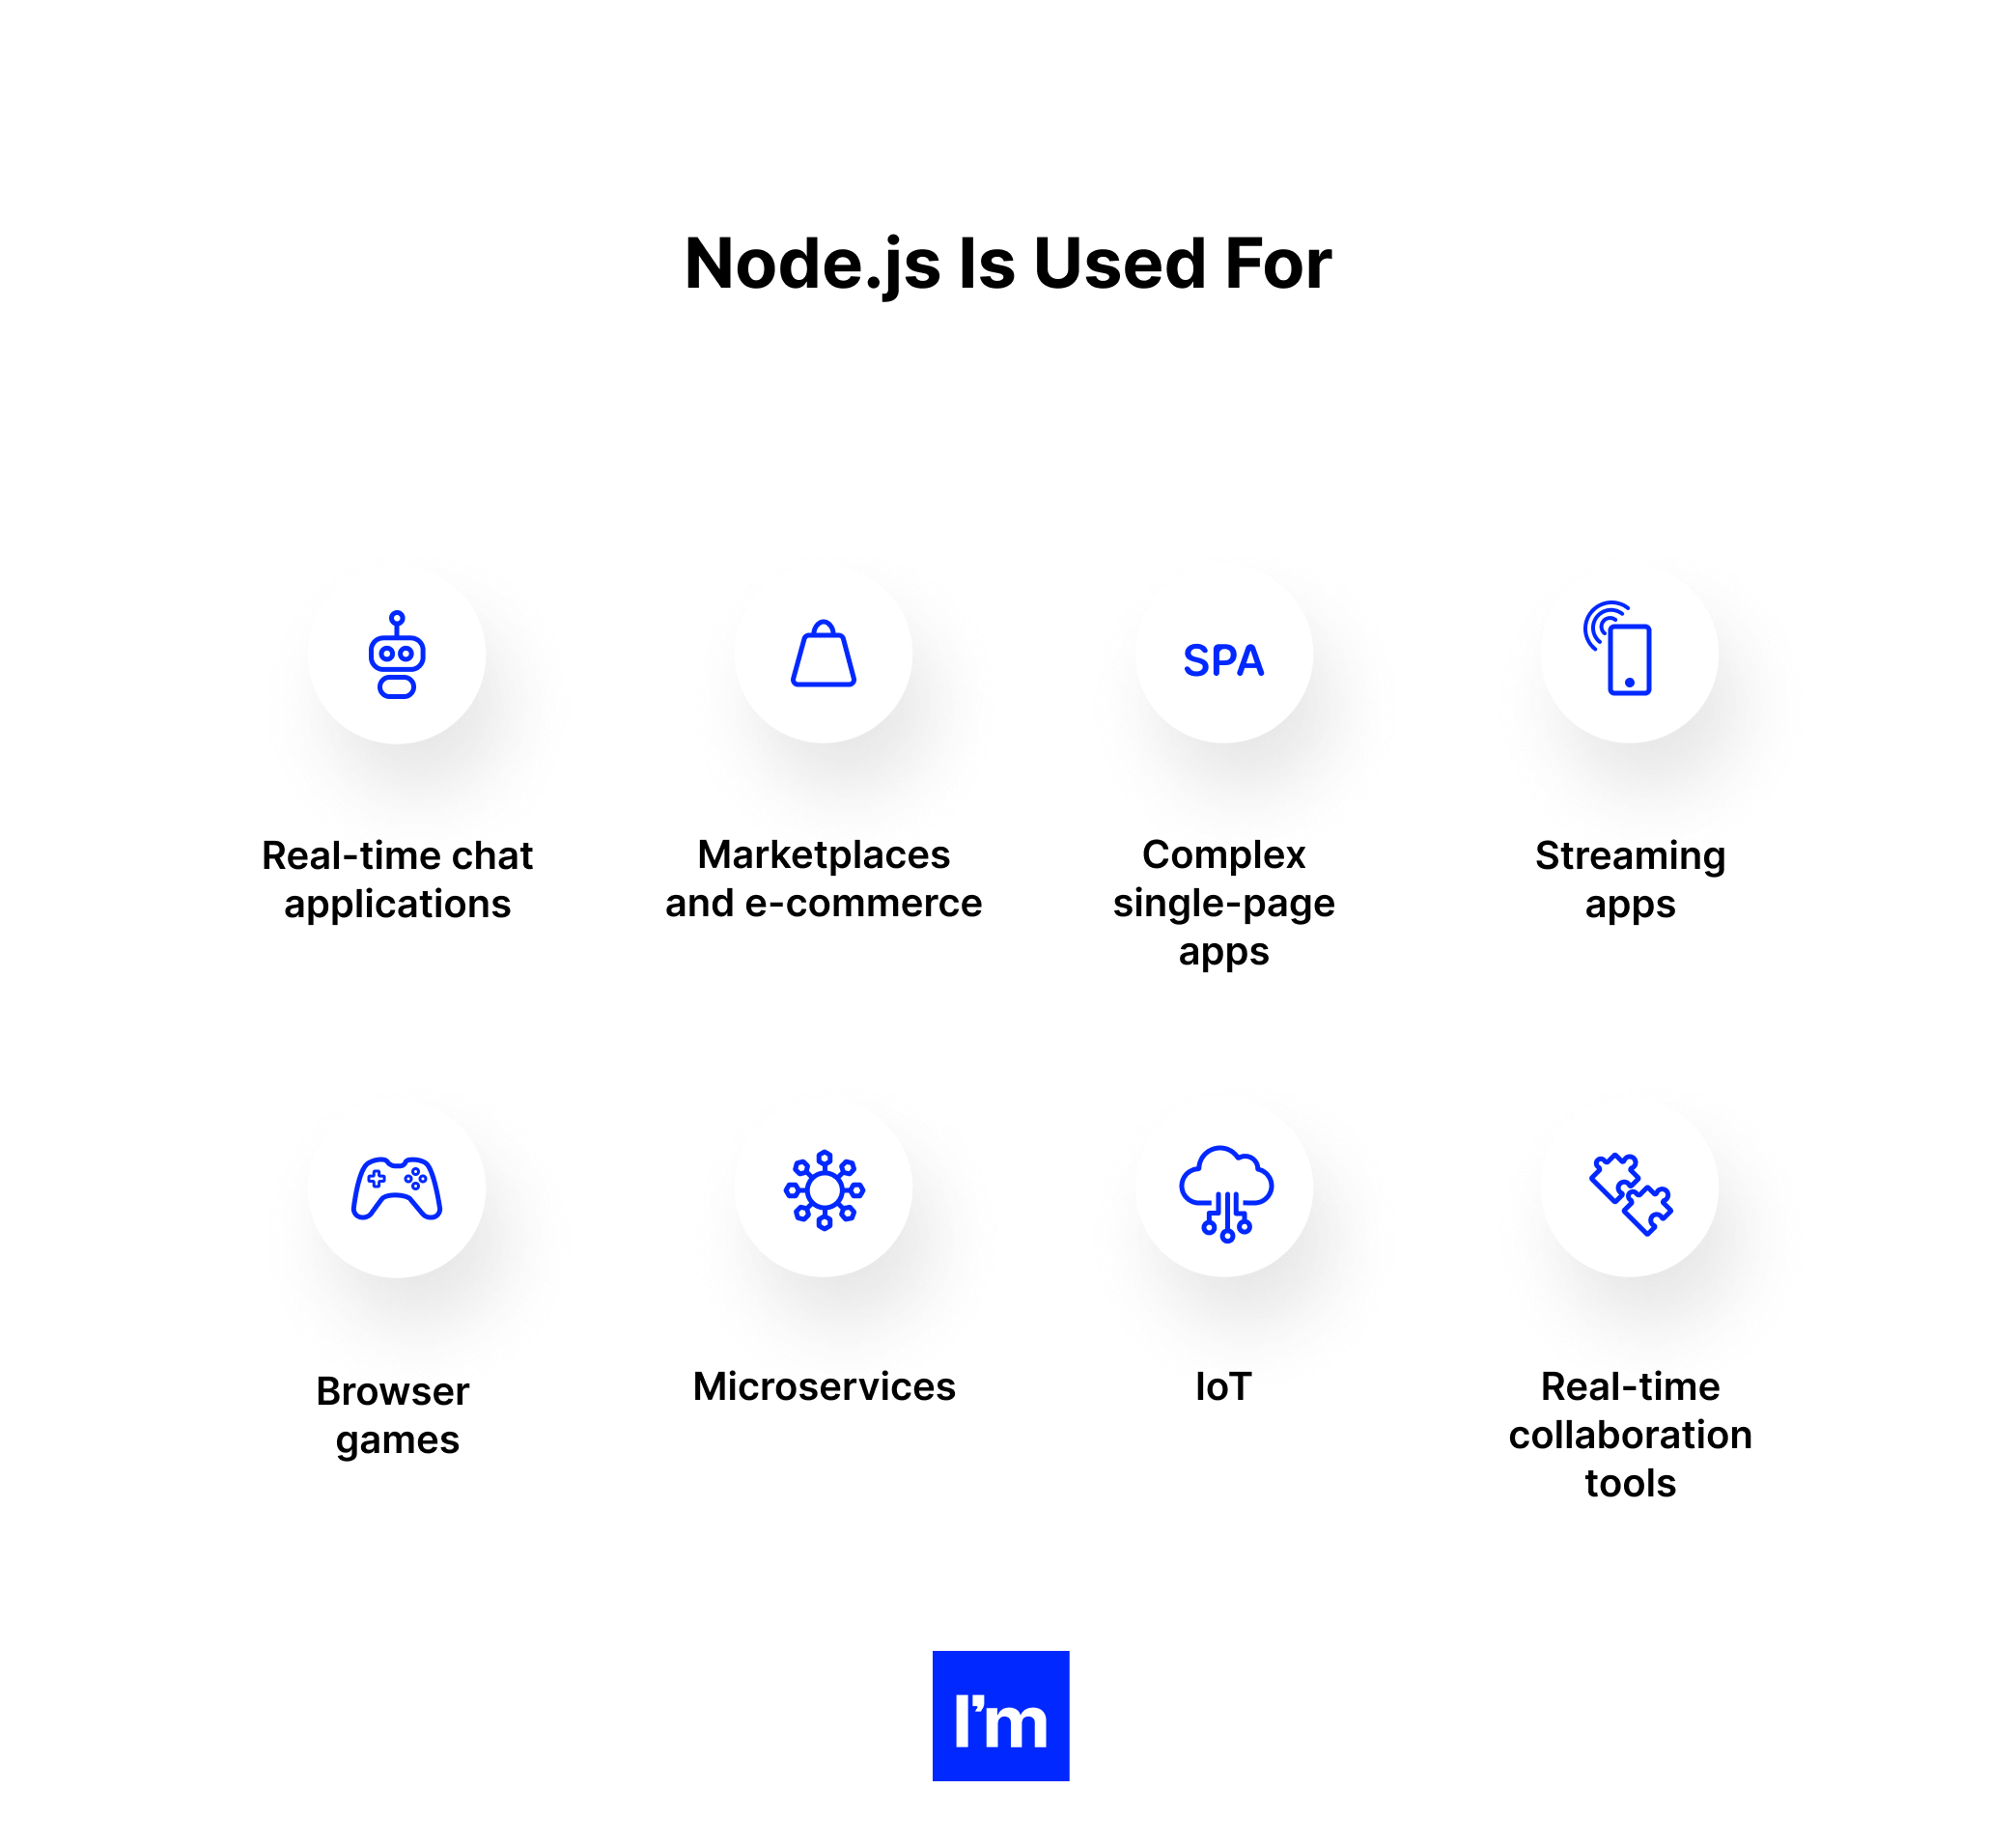 Node.js - what is nodejs used for